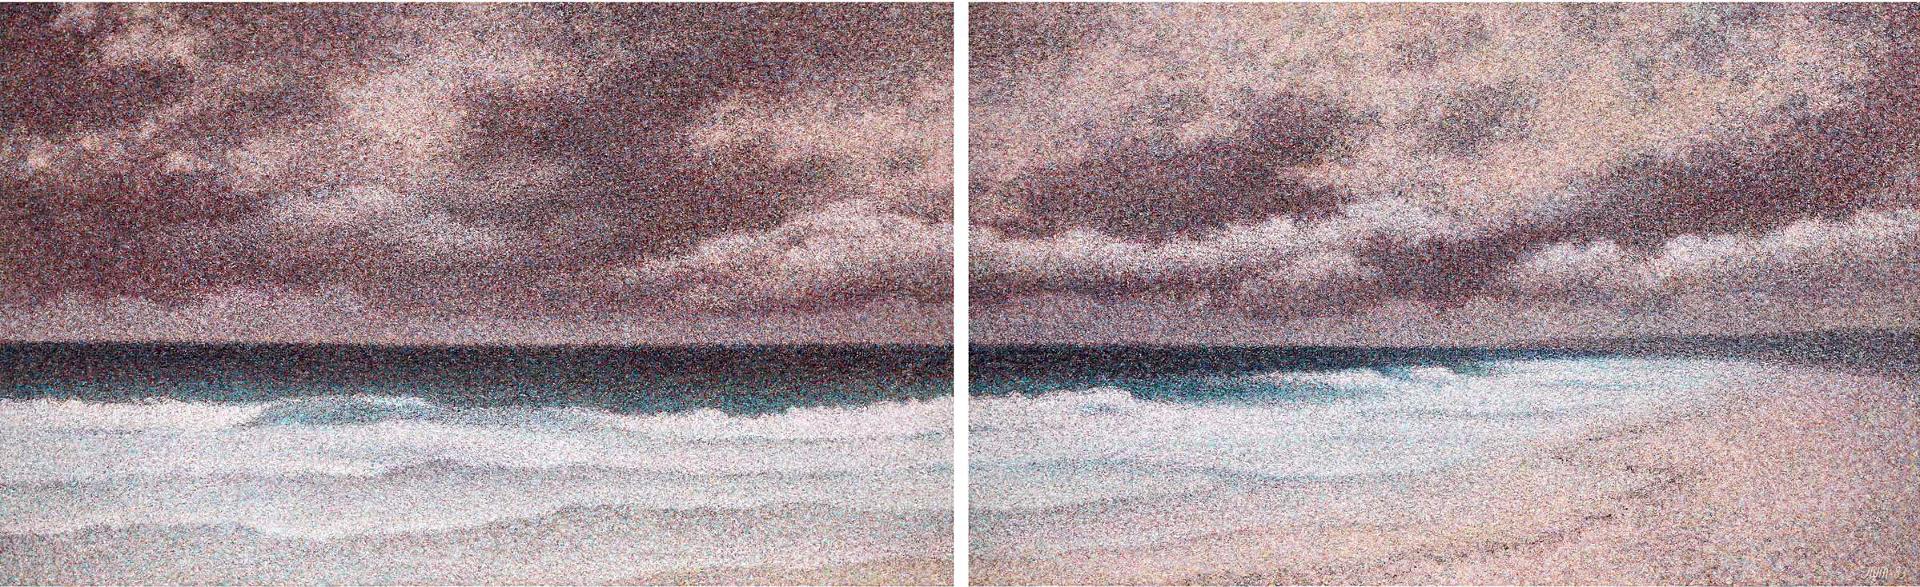 Joan Francis Willsher-Martel (1925-2017) - Beach At Can-Cun [sic], 1982